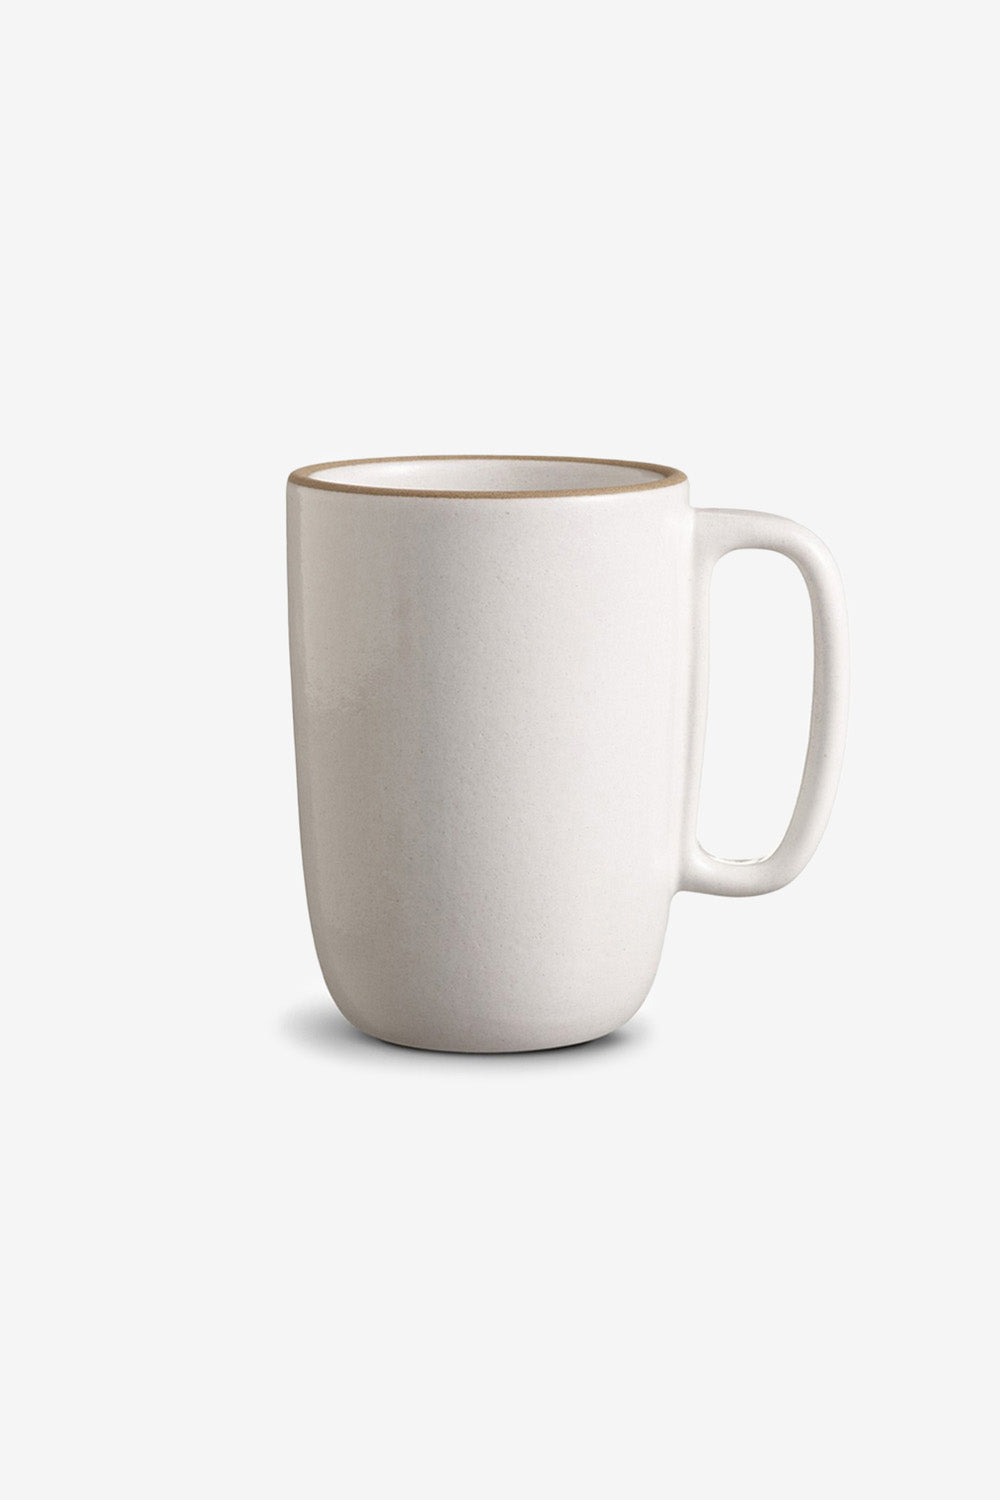 https://cdn.shopify.com/s/files/1/0411/9864/9508/products/alabama-chanin--heath-ceramics--large-mug--life-living--white.jpg?v=1632837530